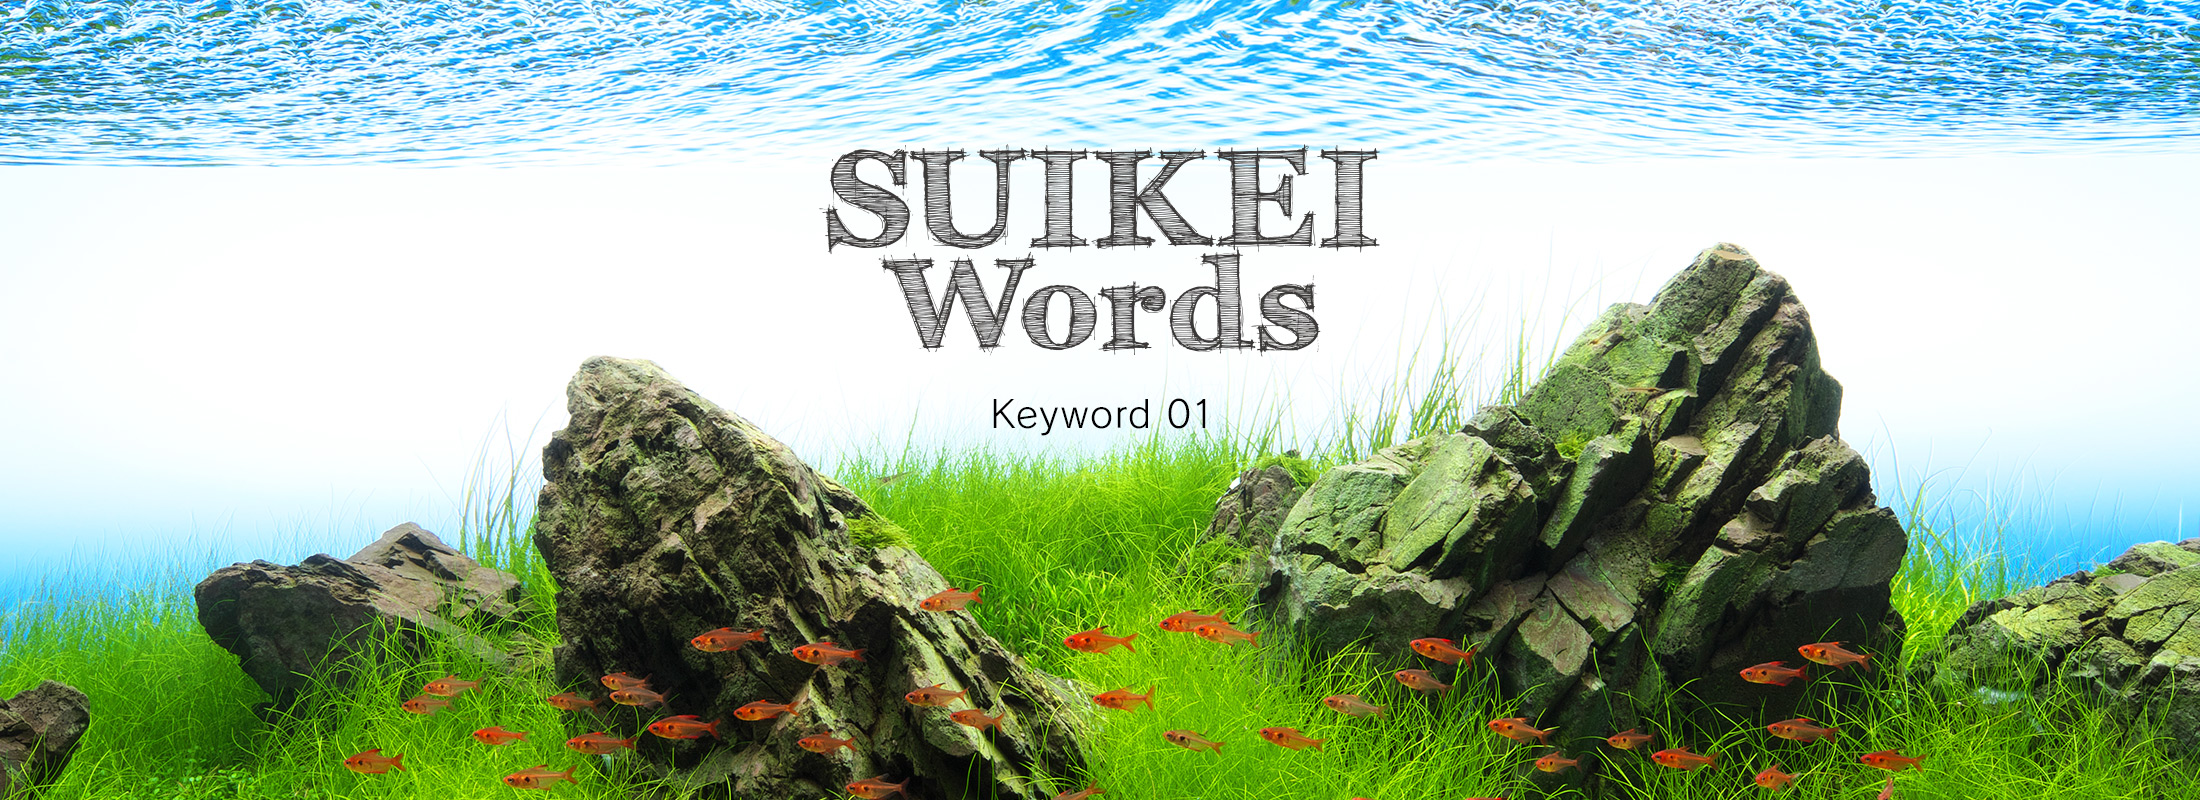 SUIKEI Words Keyword 01 ‘Layout composition – Iwagumi’